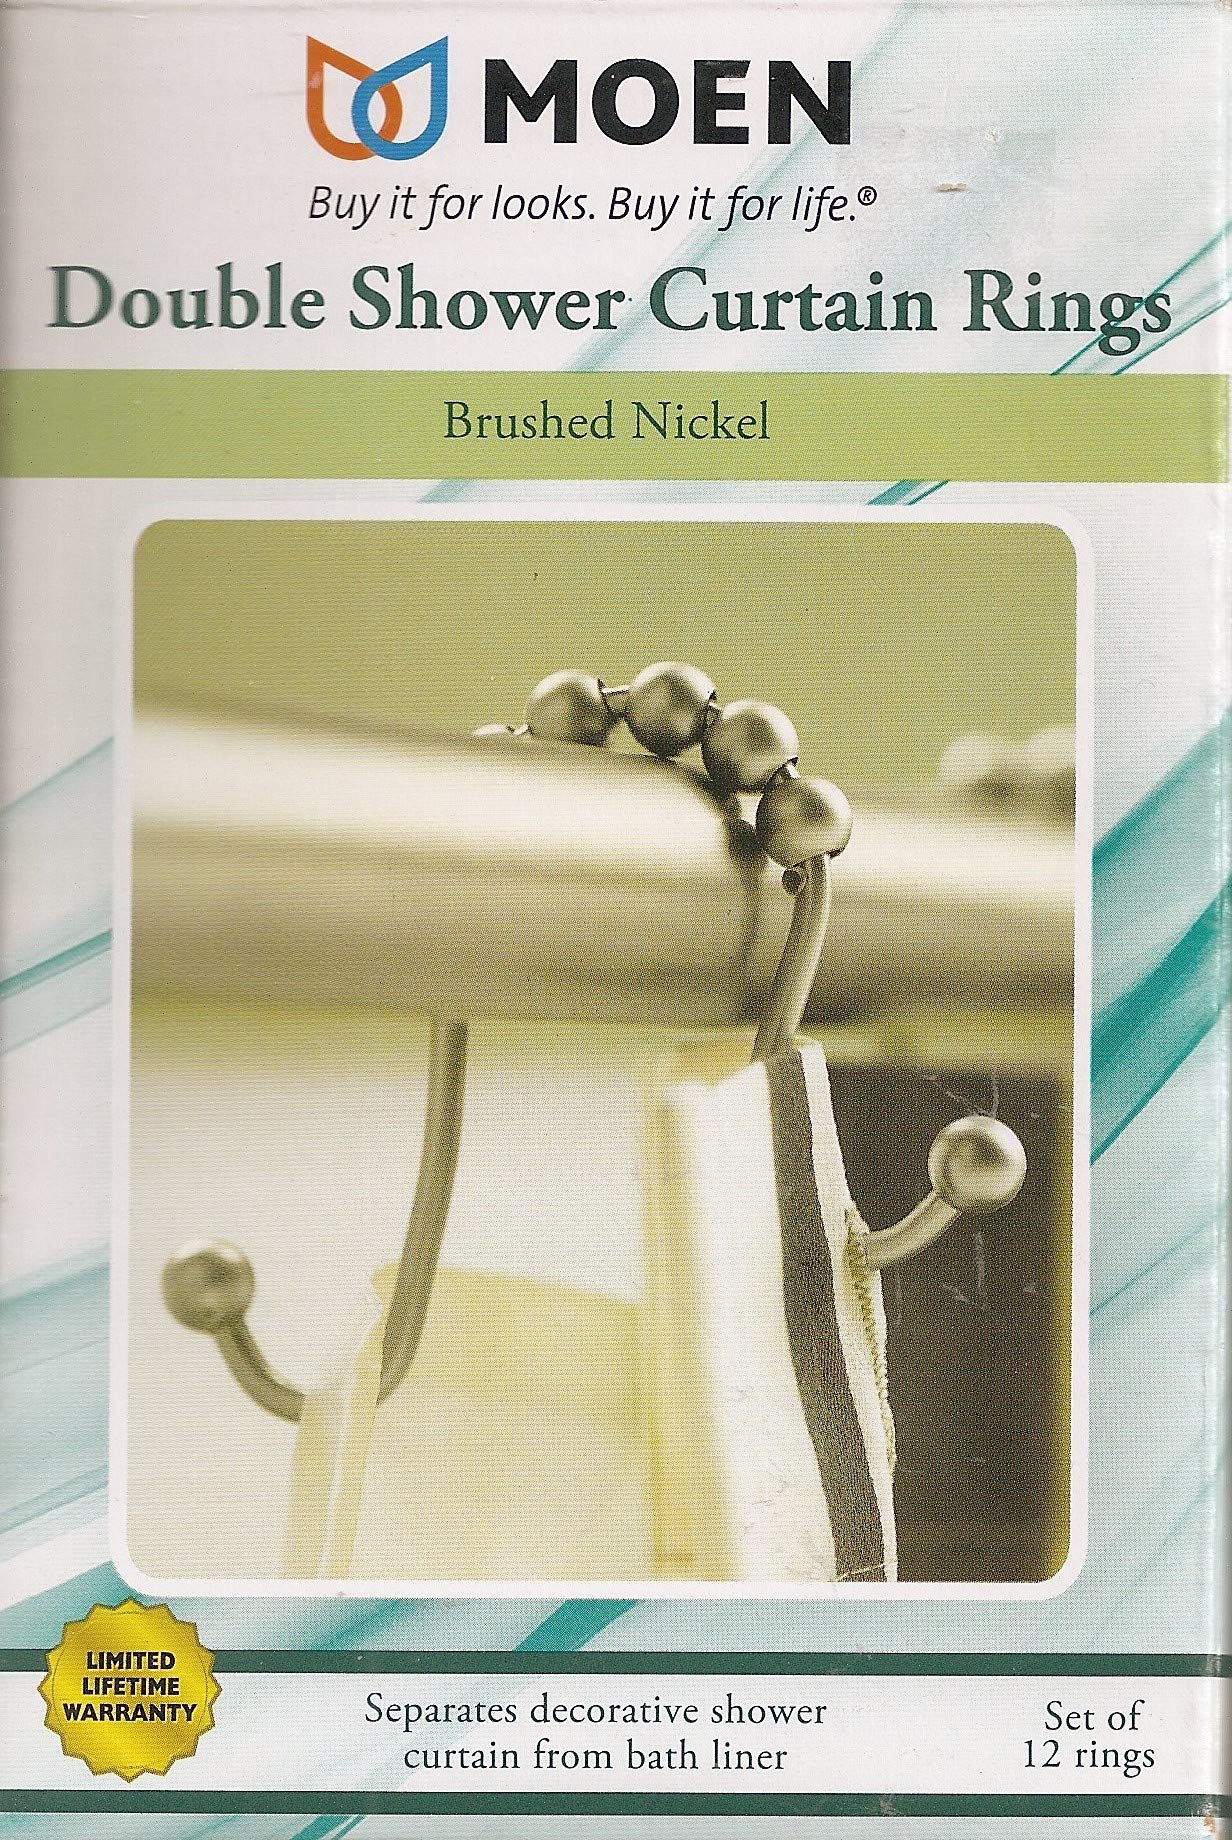 Moen Double Shower Curtain Rings - Brushed Nickel